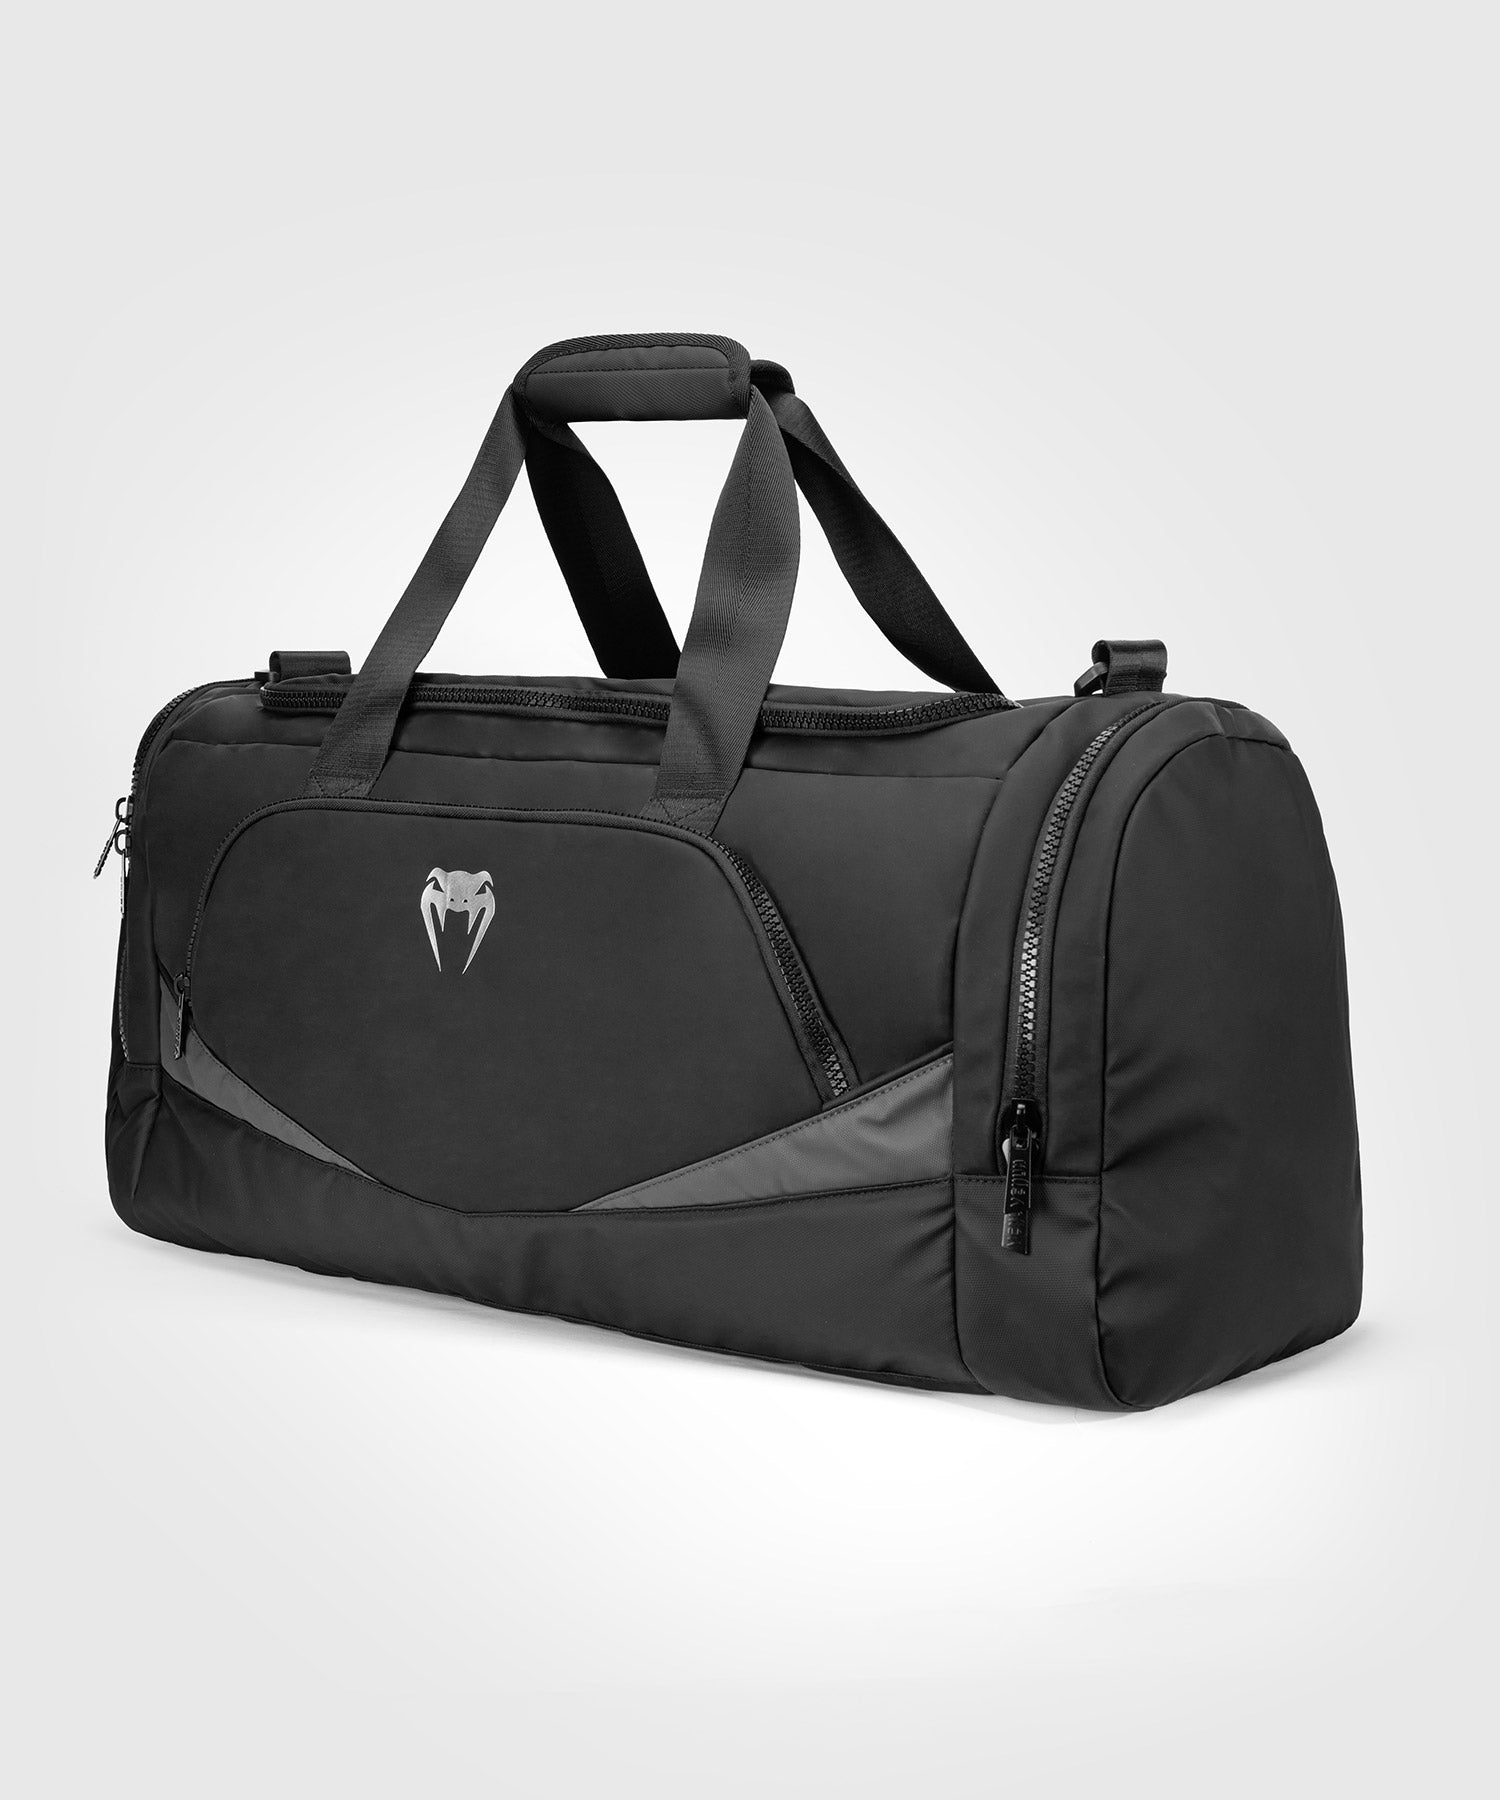 Venum Evo 2 Trainer Lite Duffle Bag - Black/Grey - Venum